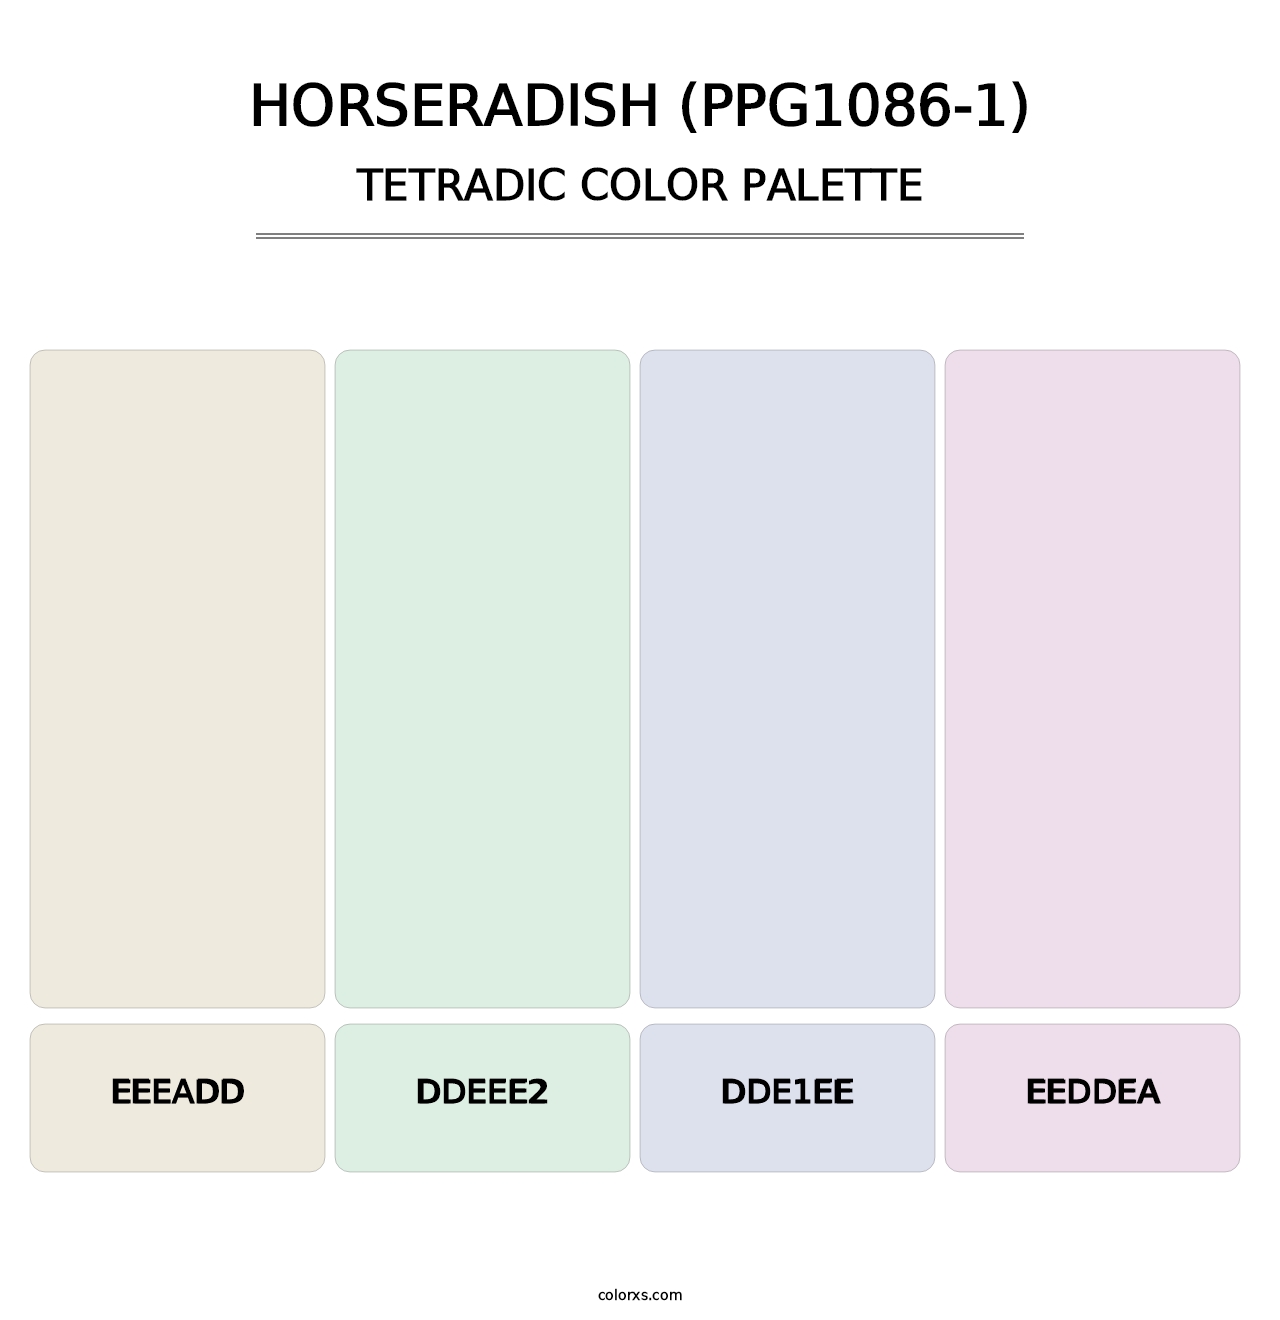 Horseradish (PPG1086-1) - Tetradic Color Palette